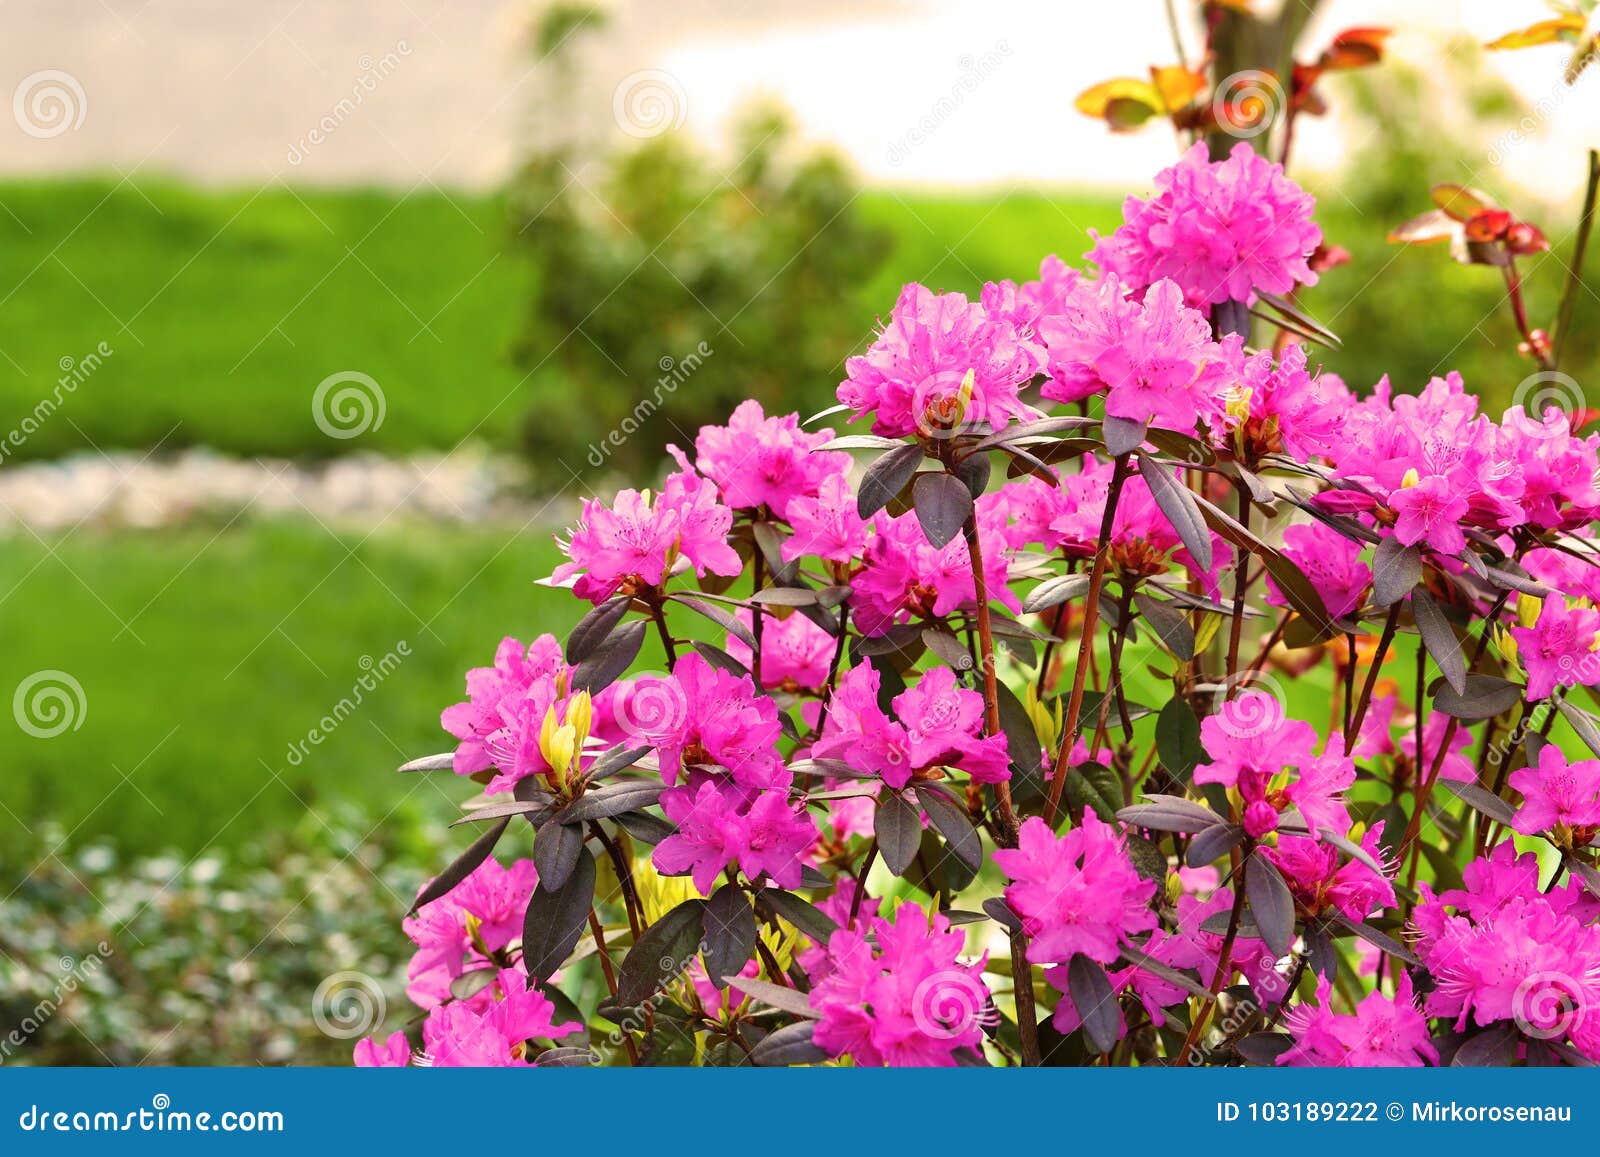 azalea, flowering shrubs member of the genus rhododendron